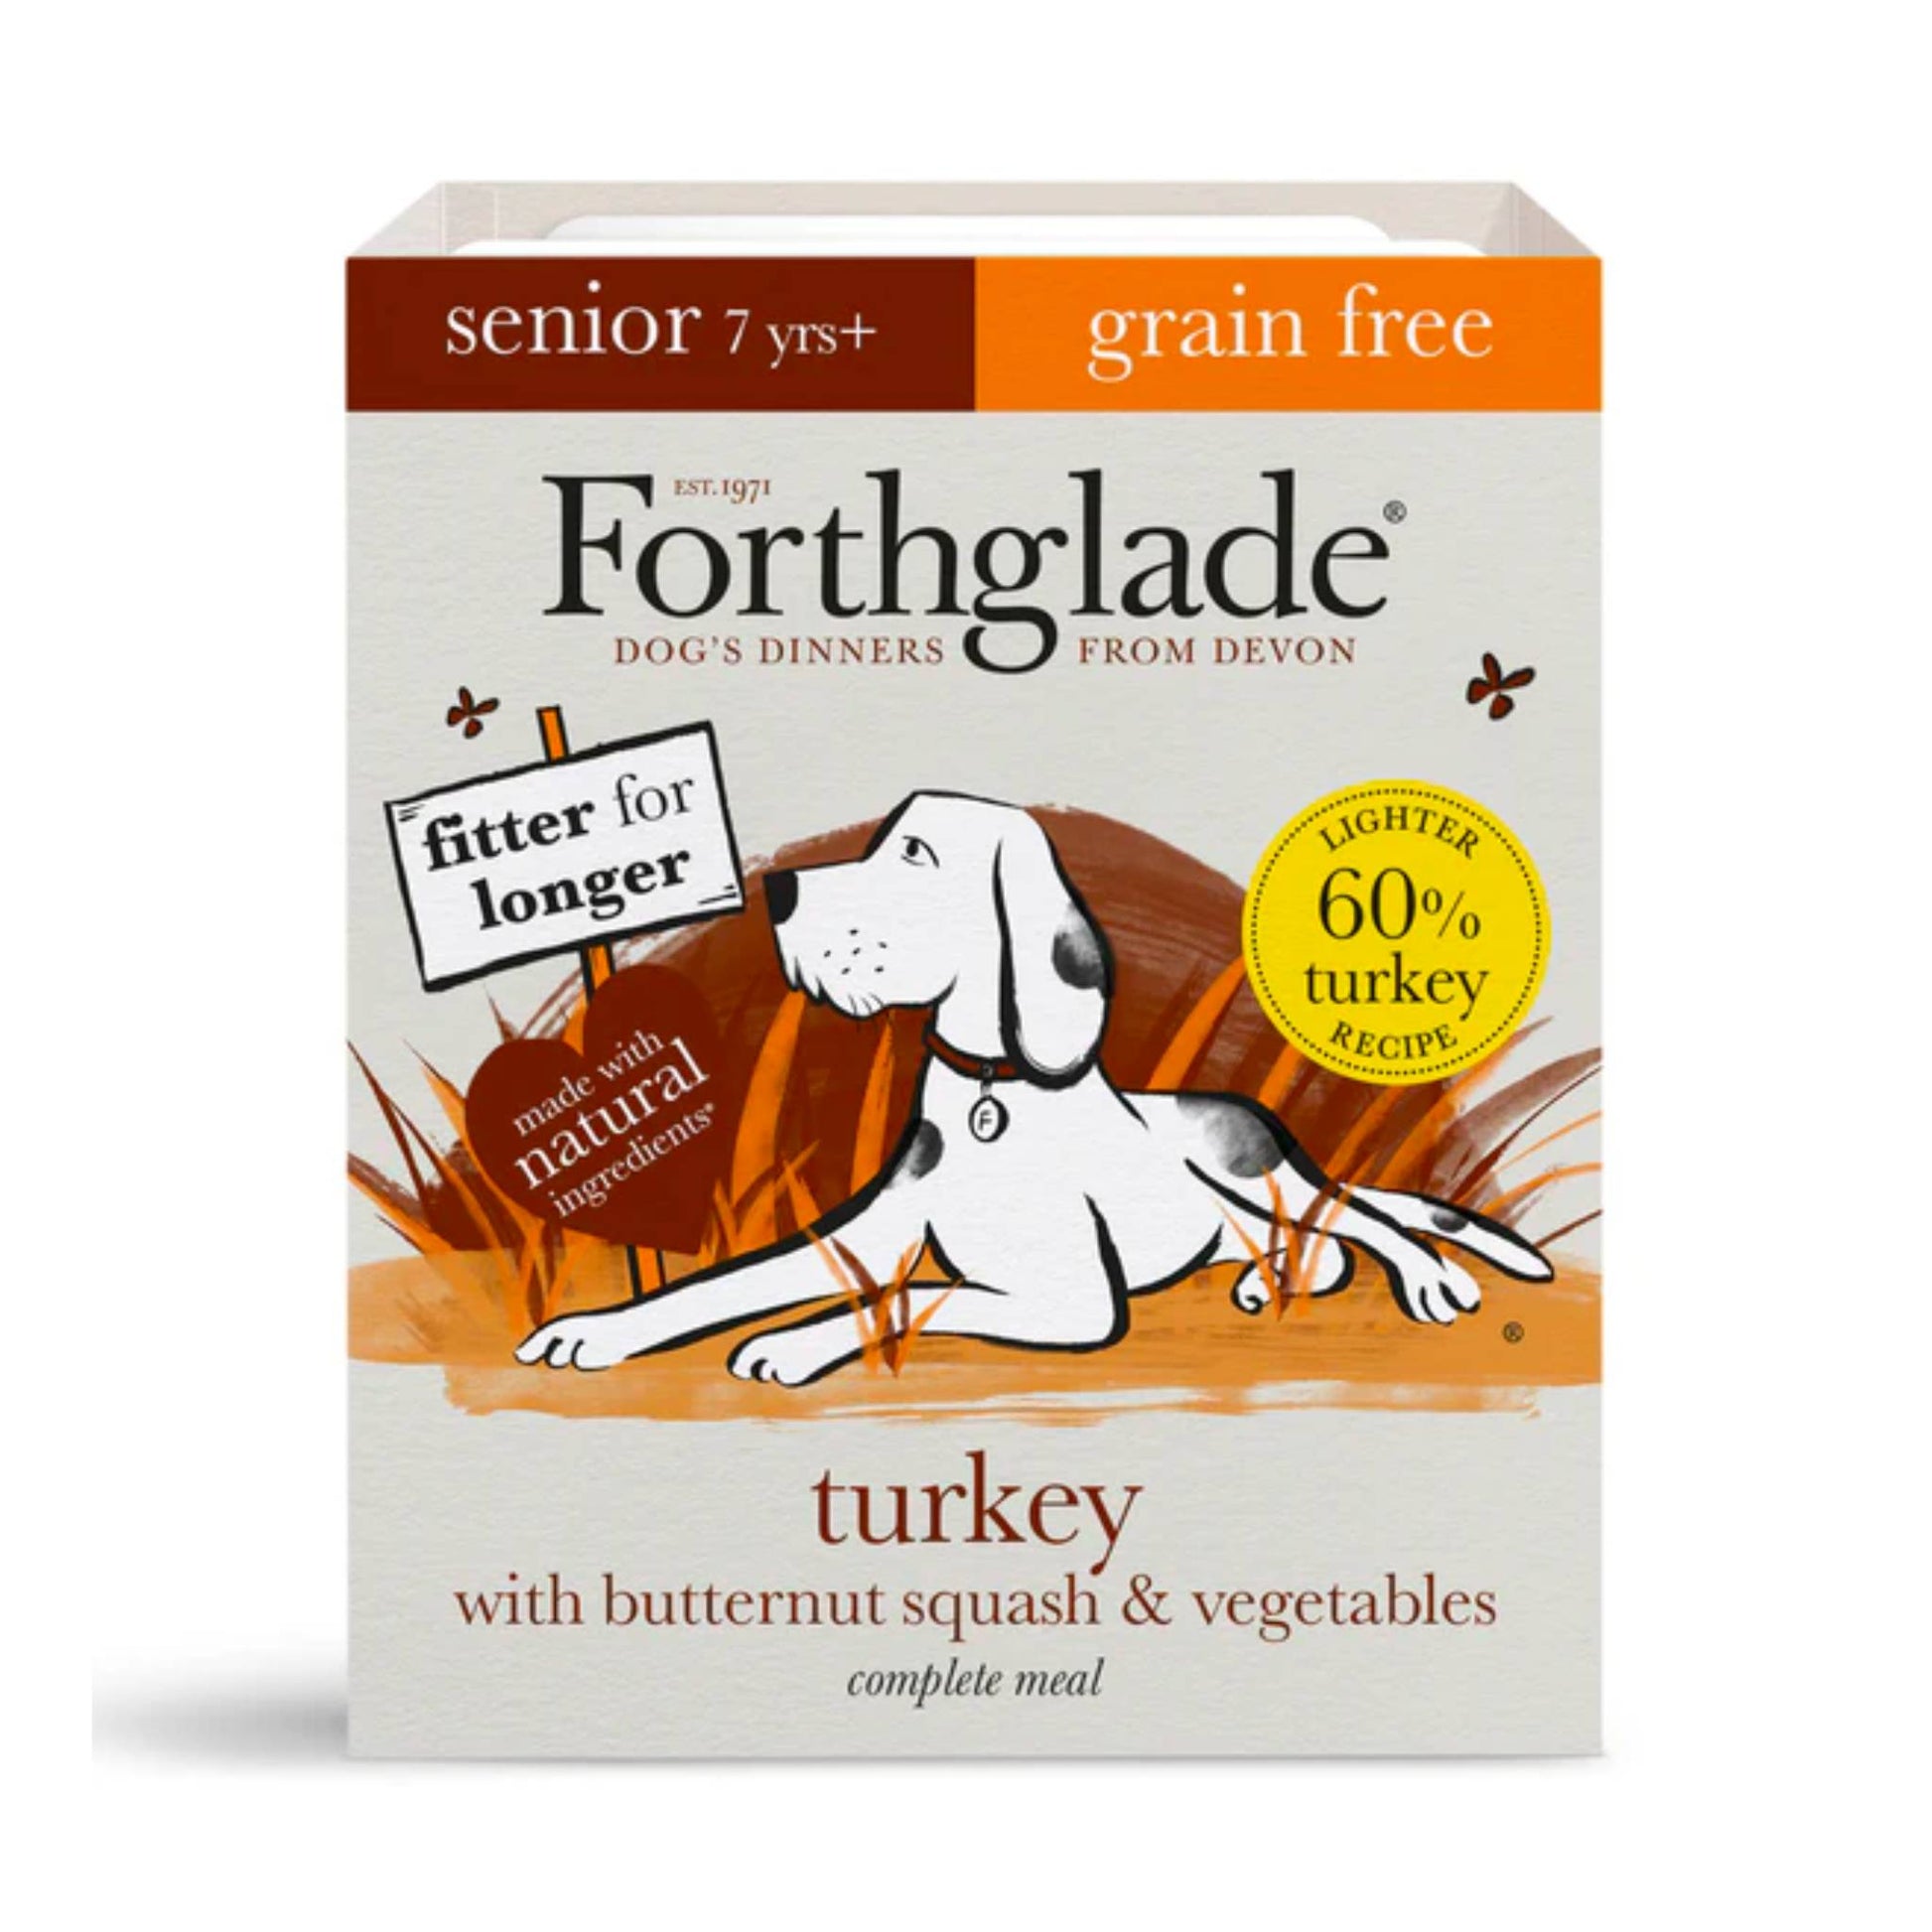 Forthglade Turkey with butternut squash & veg, Senior dog food, grain free.